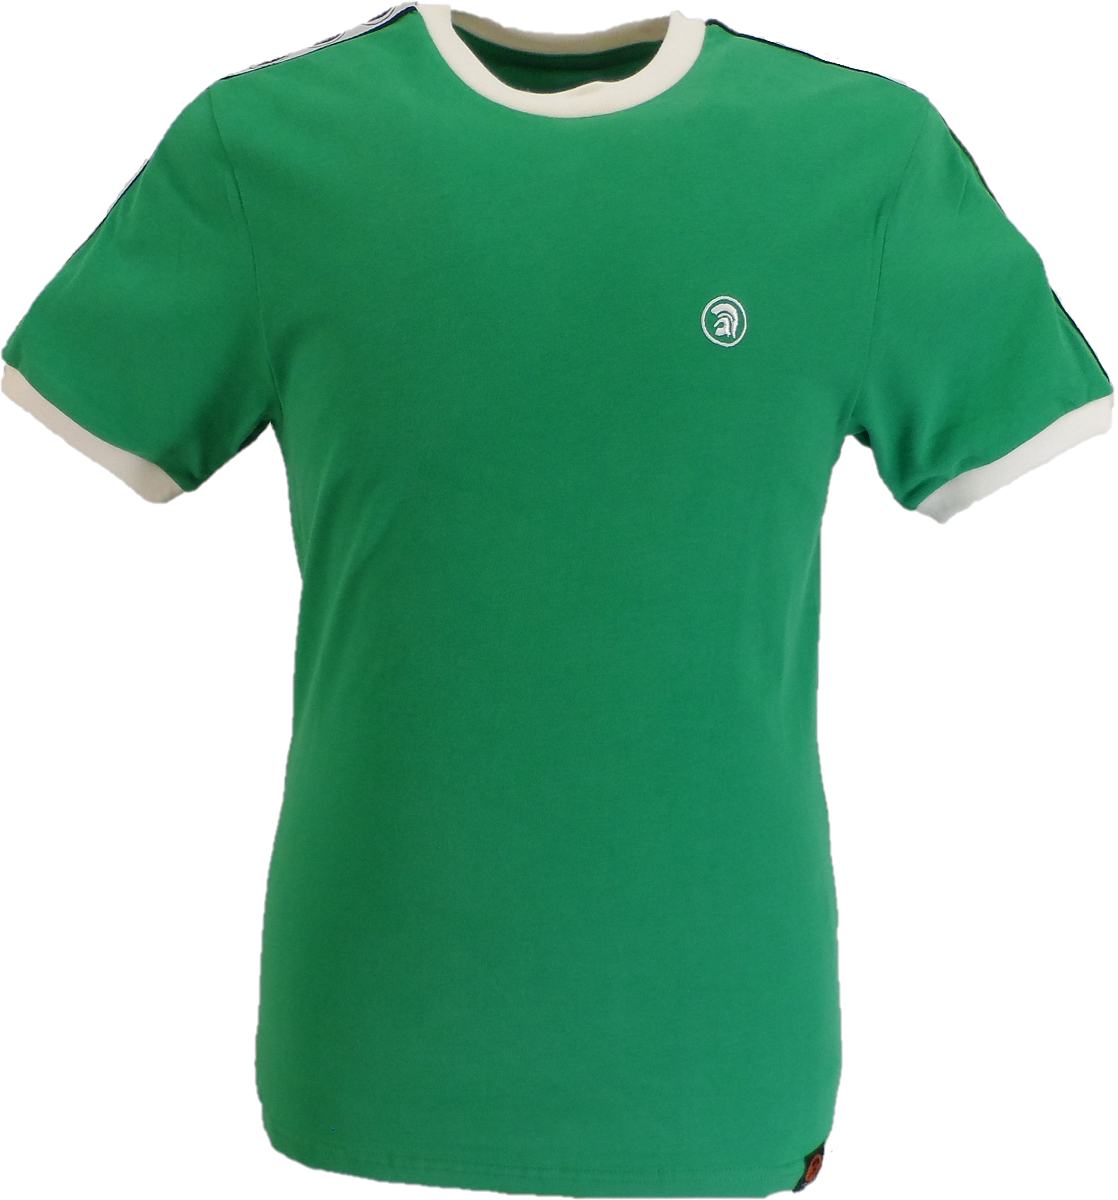 Trojan Records Mens Emerald Green Taped Sleeve Cotton Ringer T-Shirt